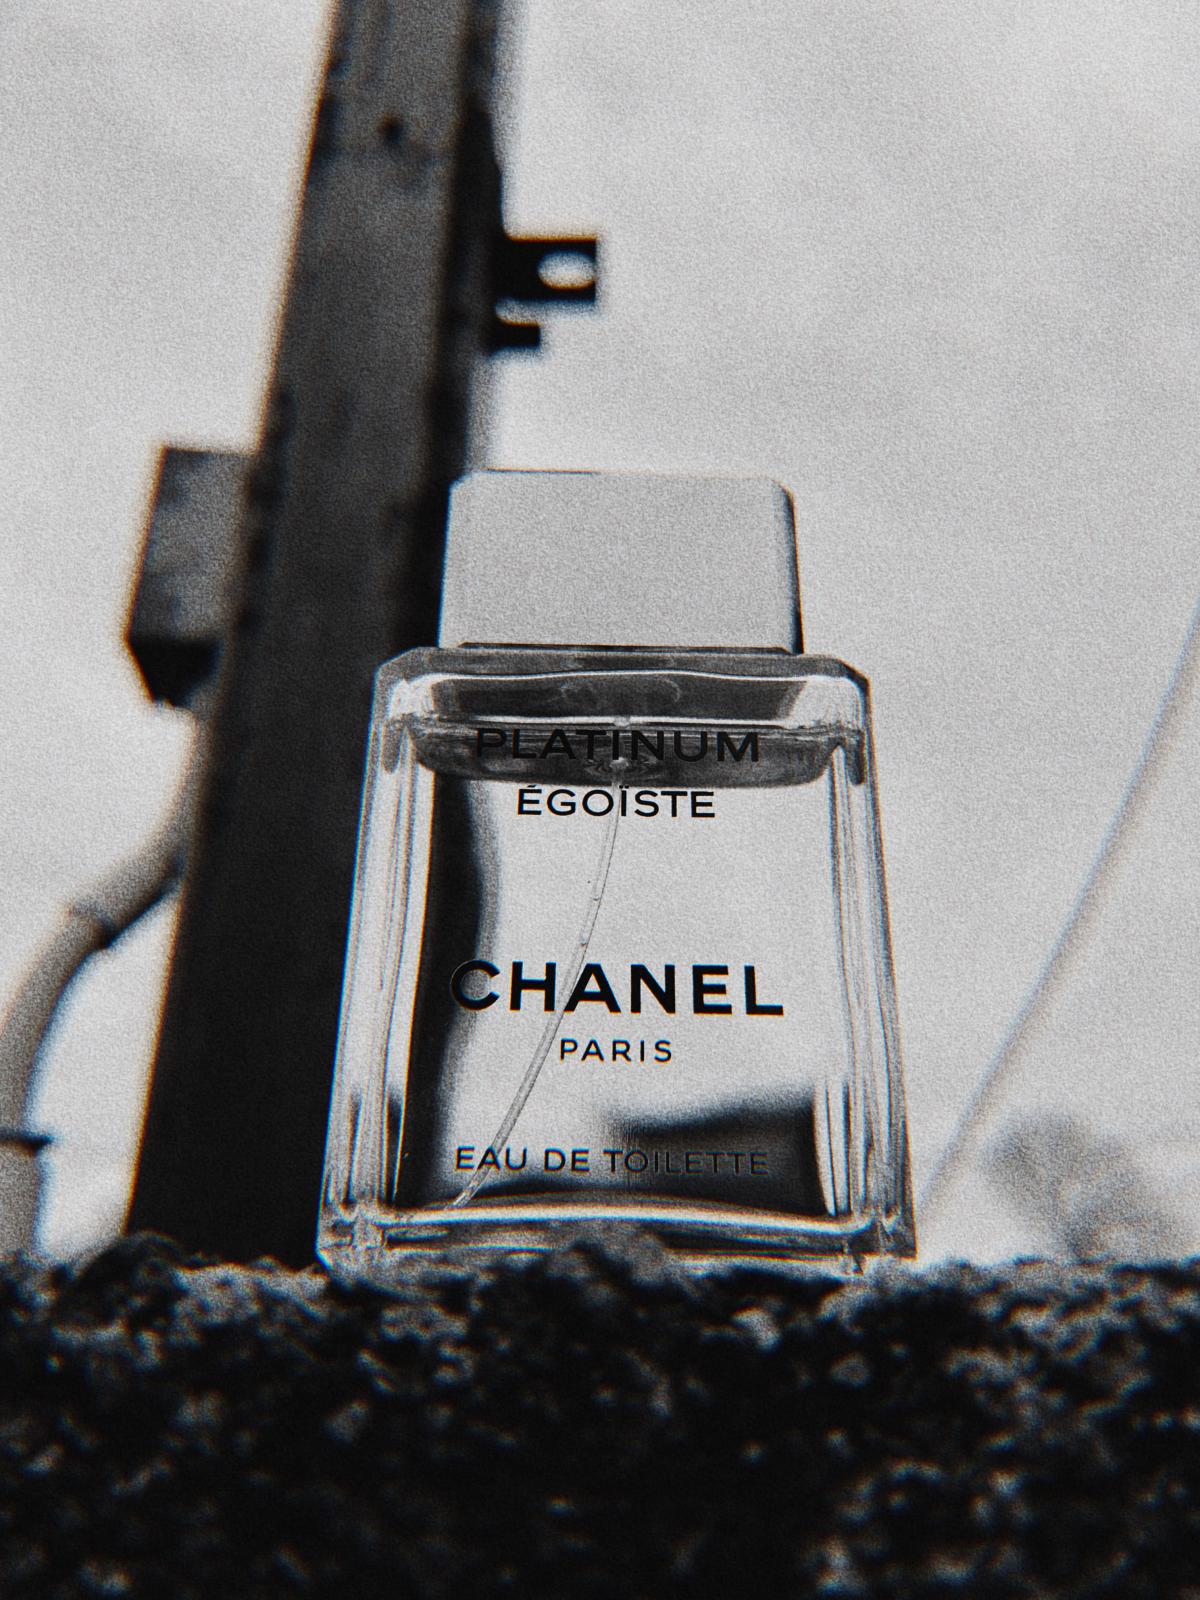 Шанель эгоист платинум оригинал. Egoiste Platinum. Chanel Egoiste. Шанель эгоист платинум. Chanel Egoiste Platinum реклама.